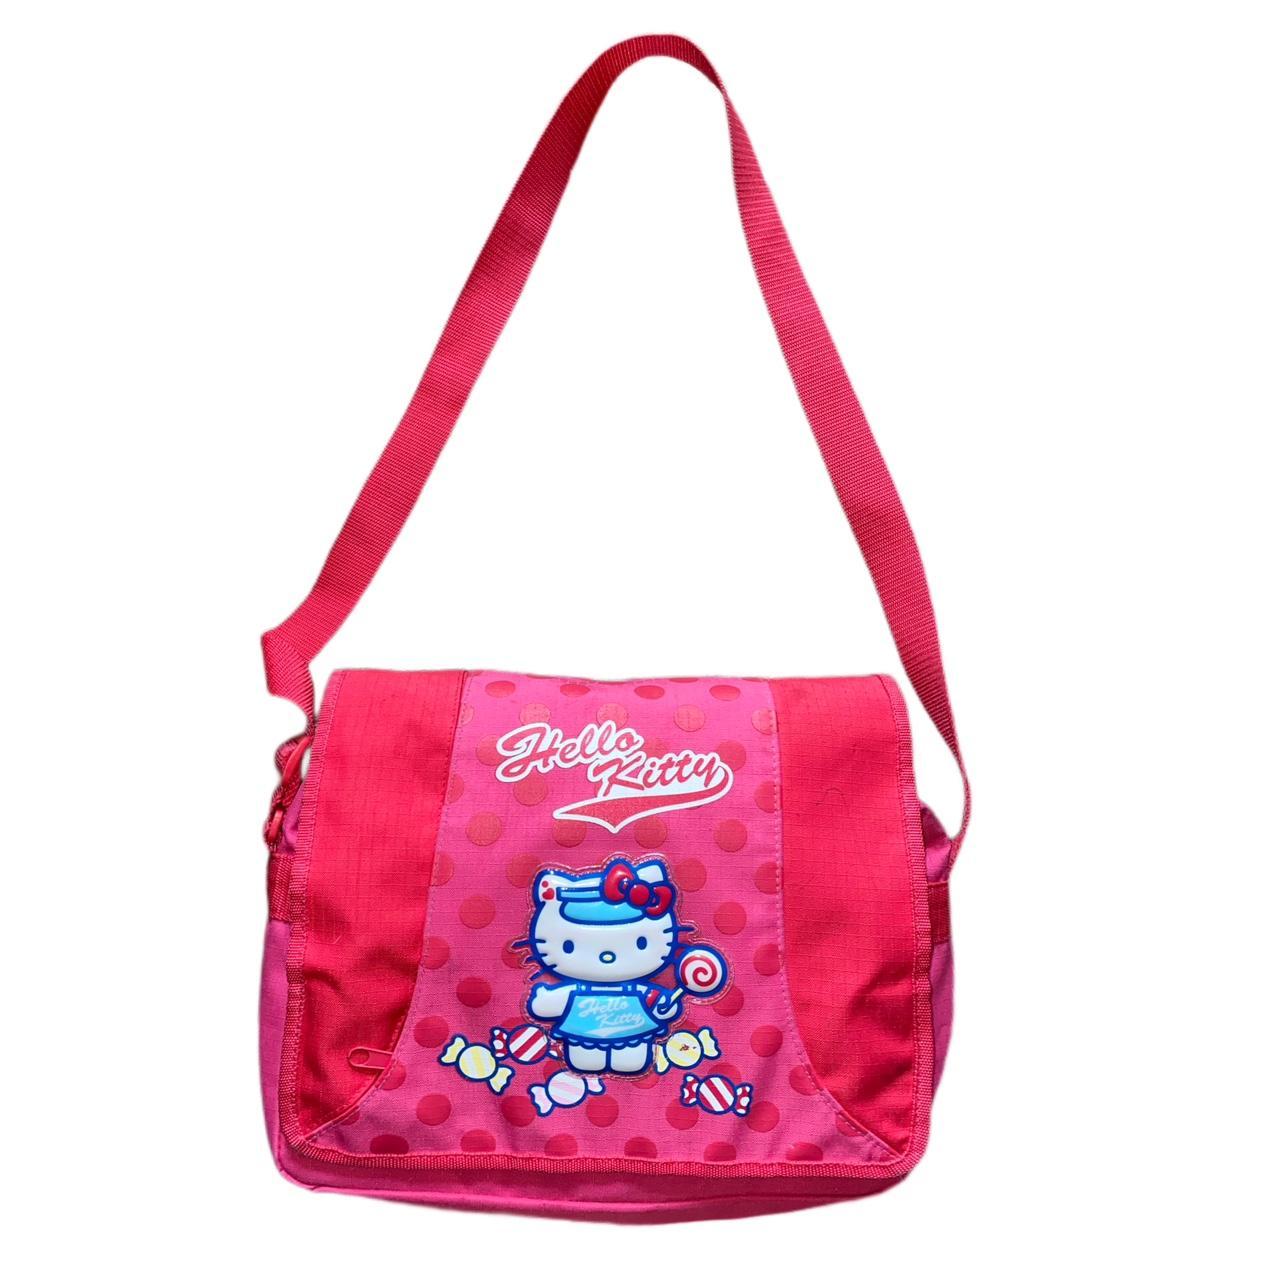 Sanrio Messenger Messenger Bags